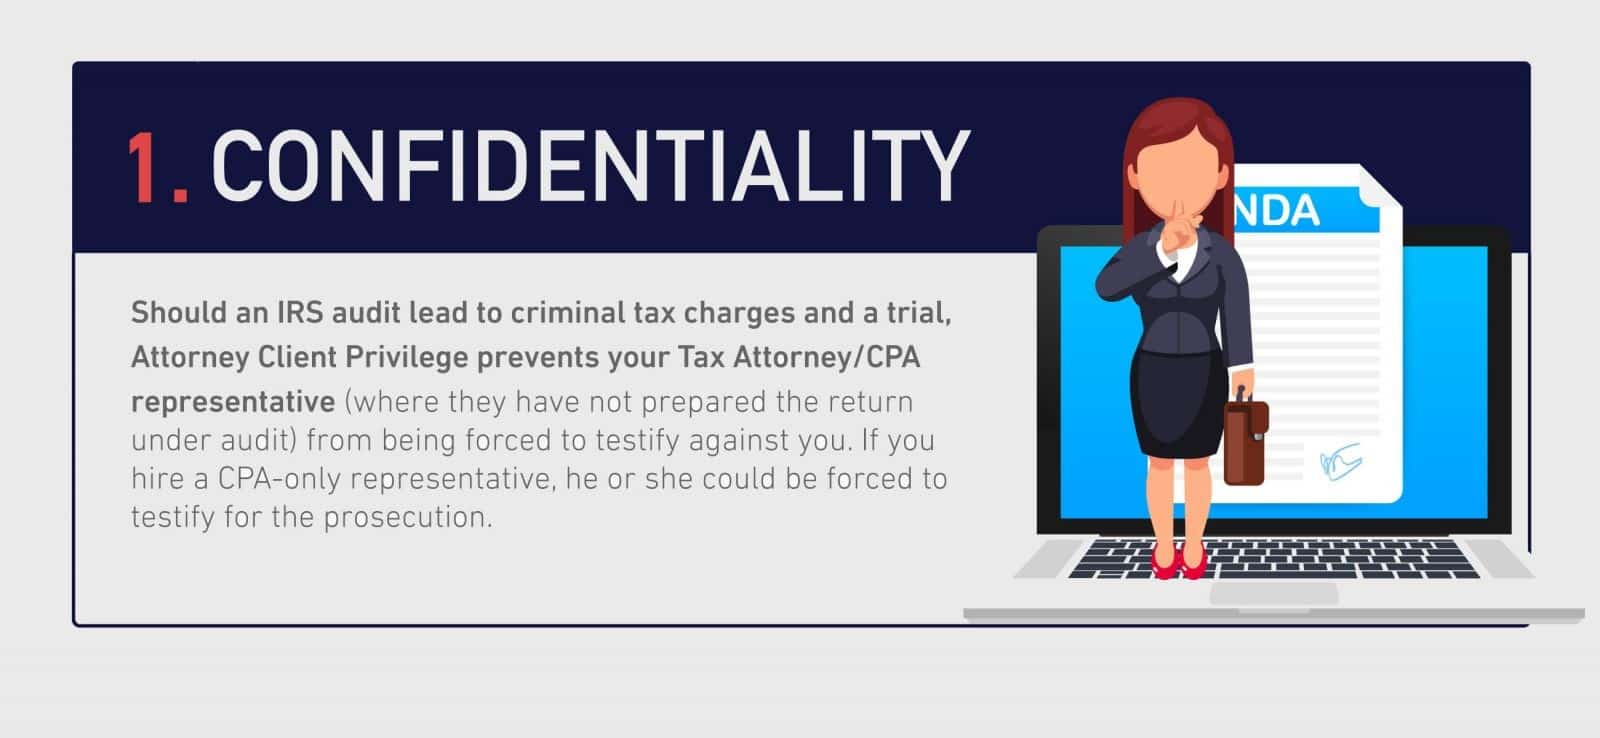 Confidentiality-klasing-associates-san-francisco-tax-attorney